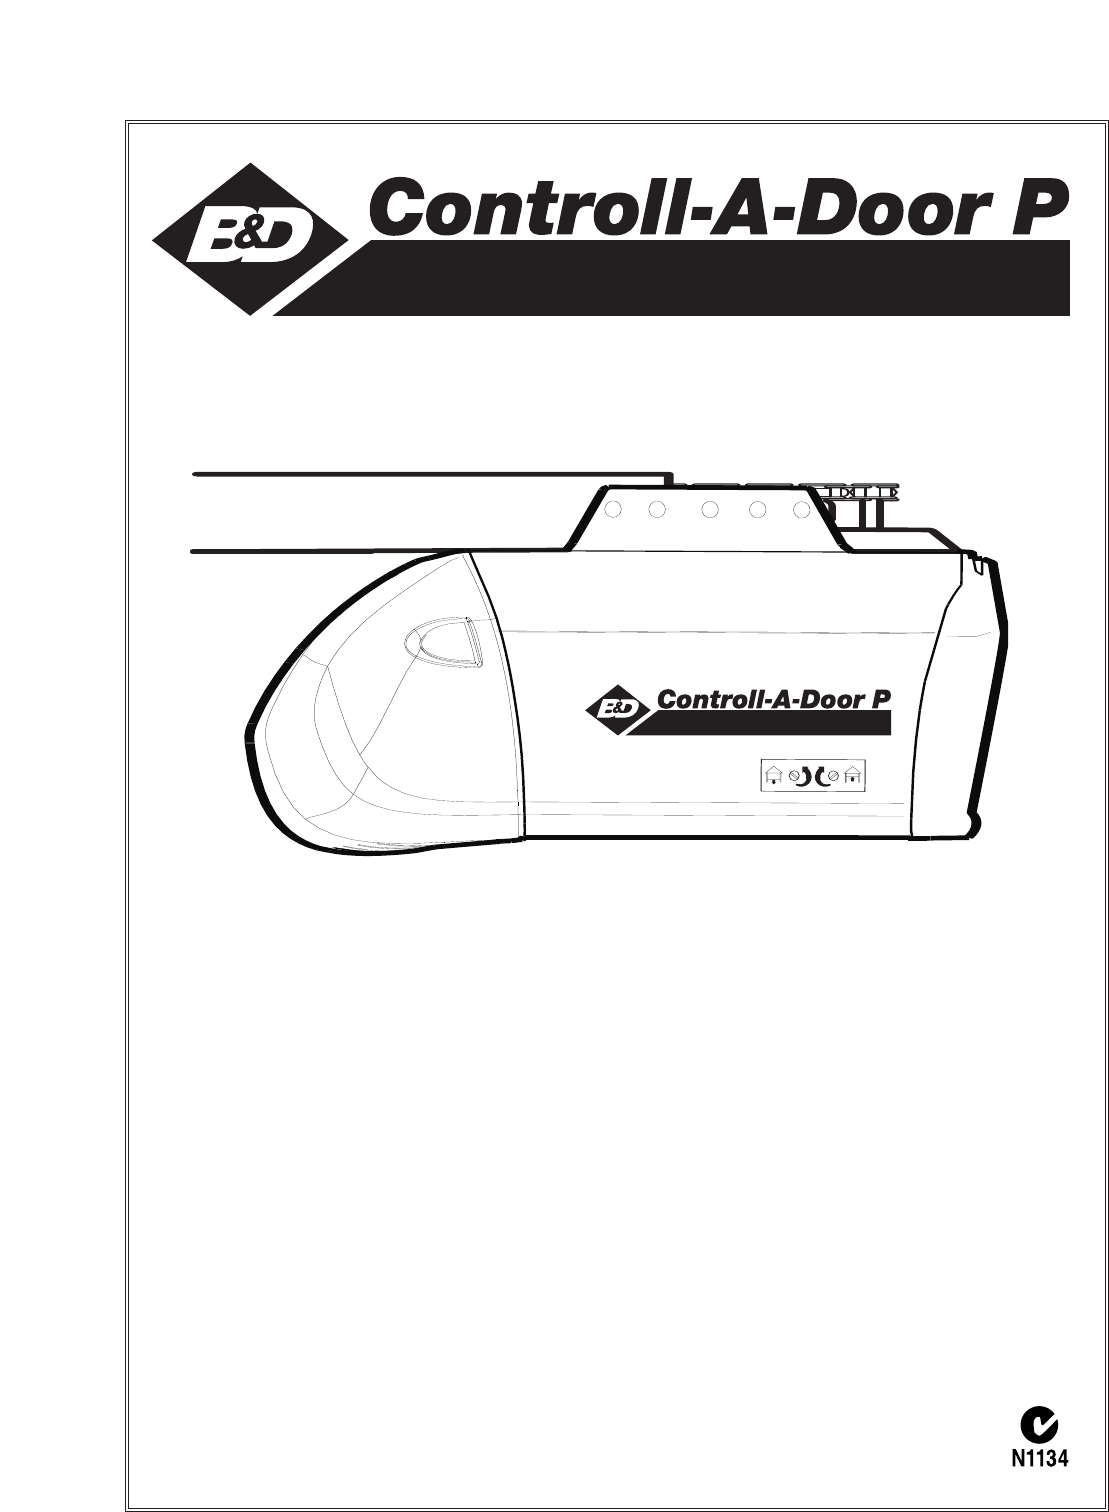 Chamberlain Garage Door Opener Manual - cloudshareinfo